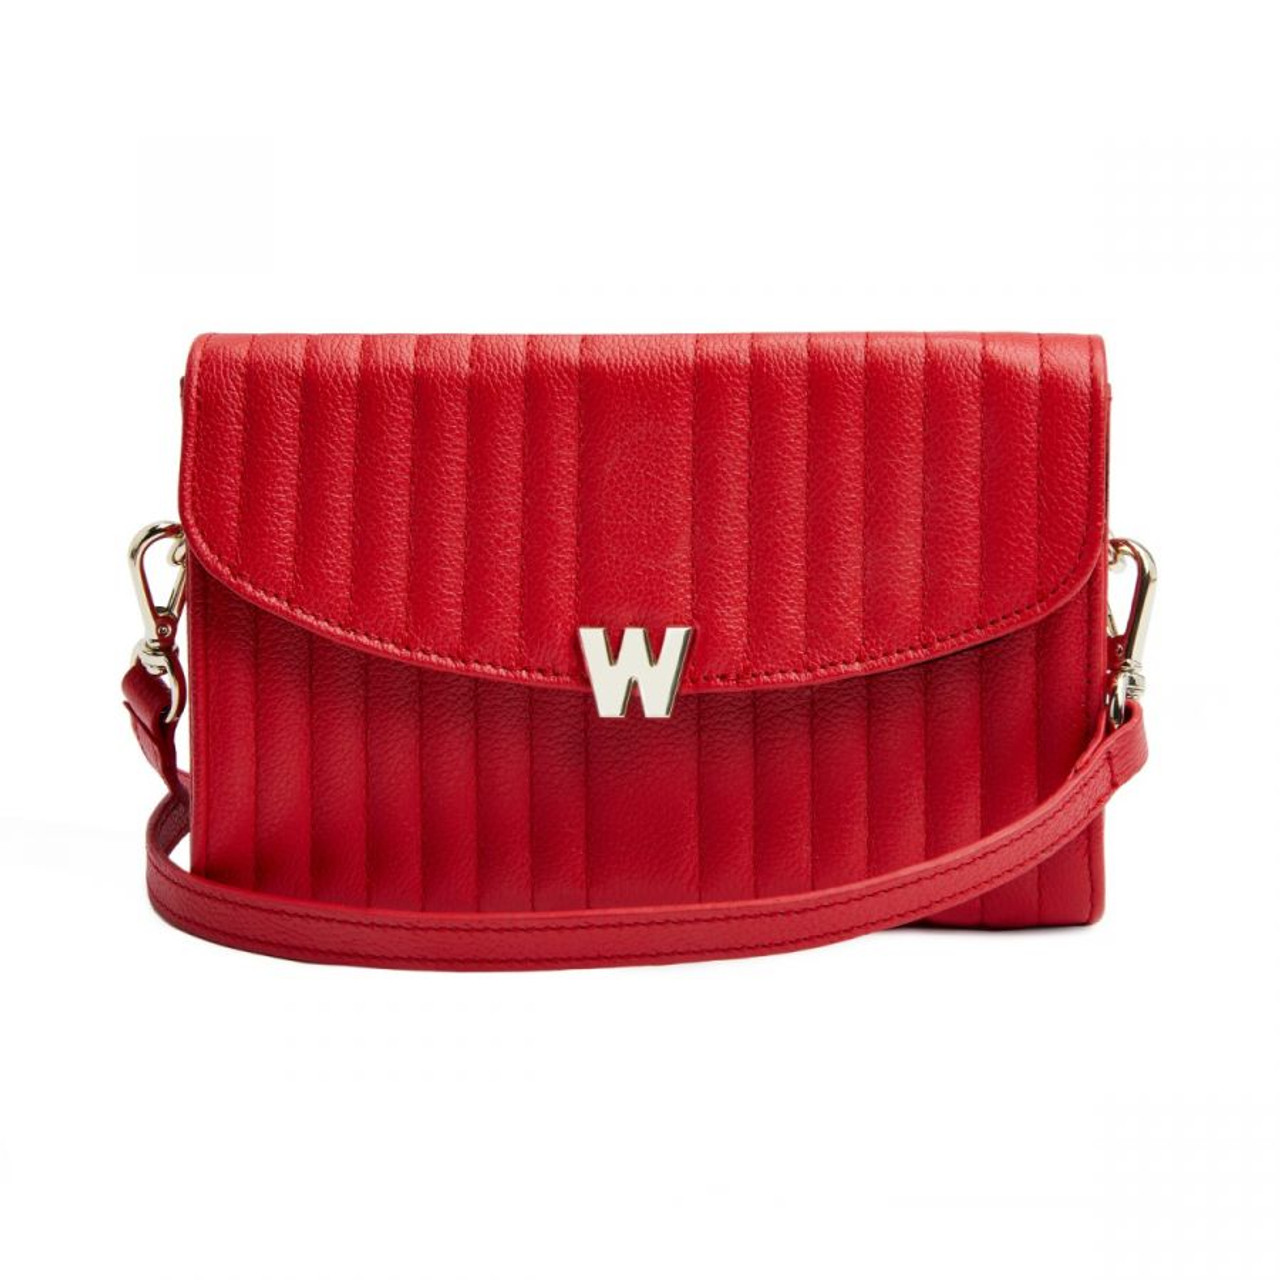 Buy Pauls Boutique London Women's Top-Handle Bag Online at